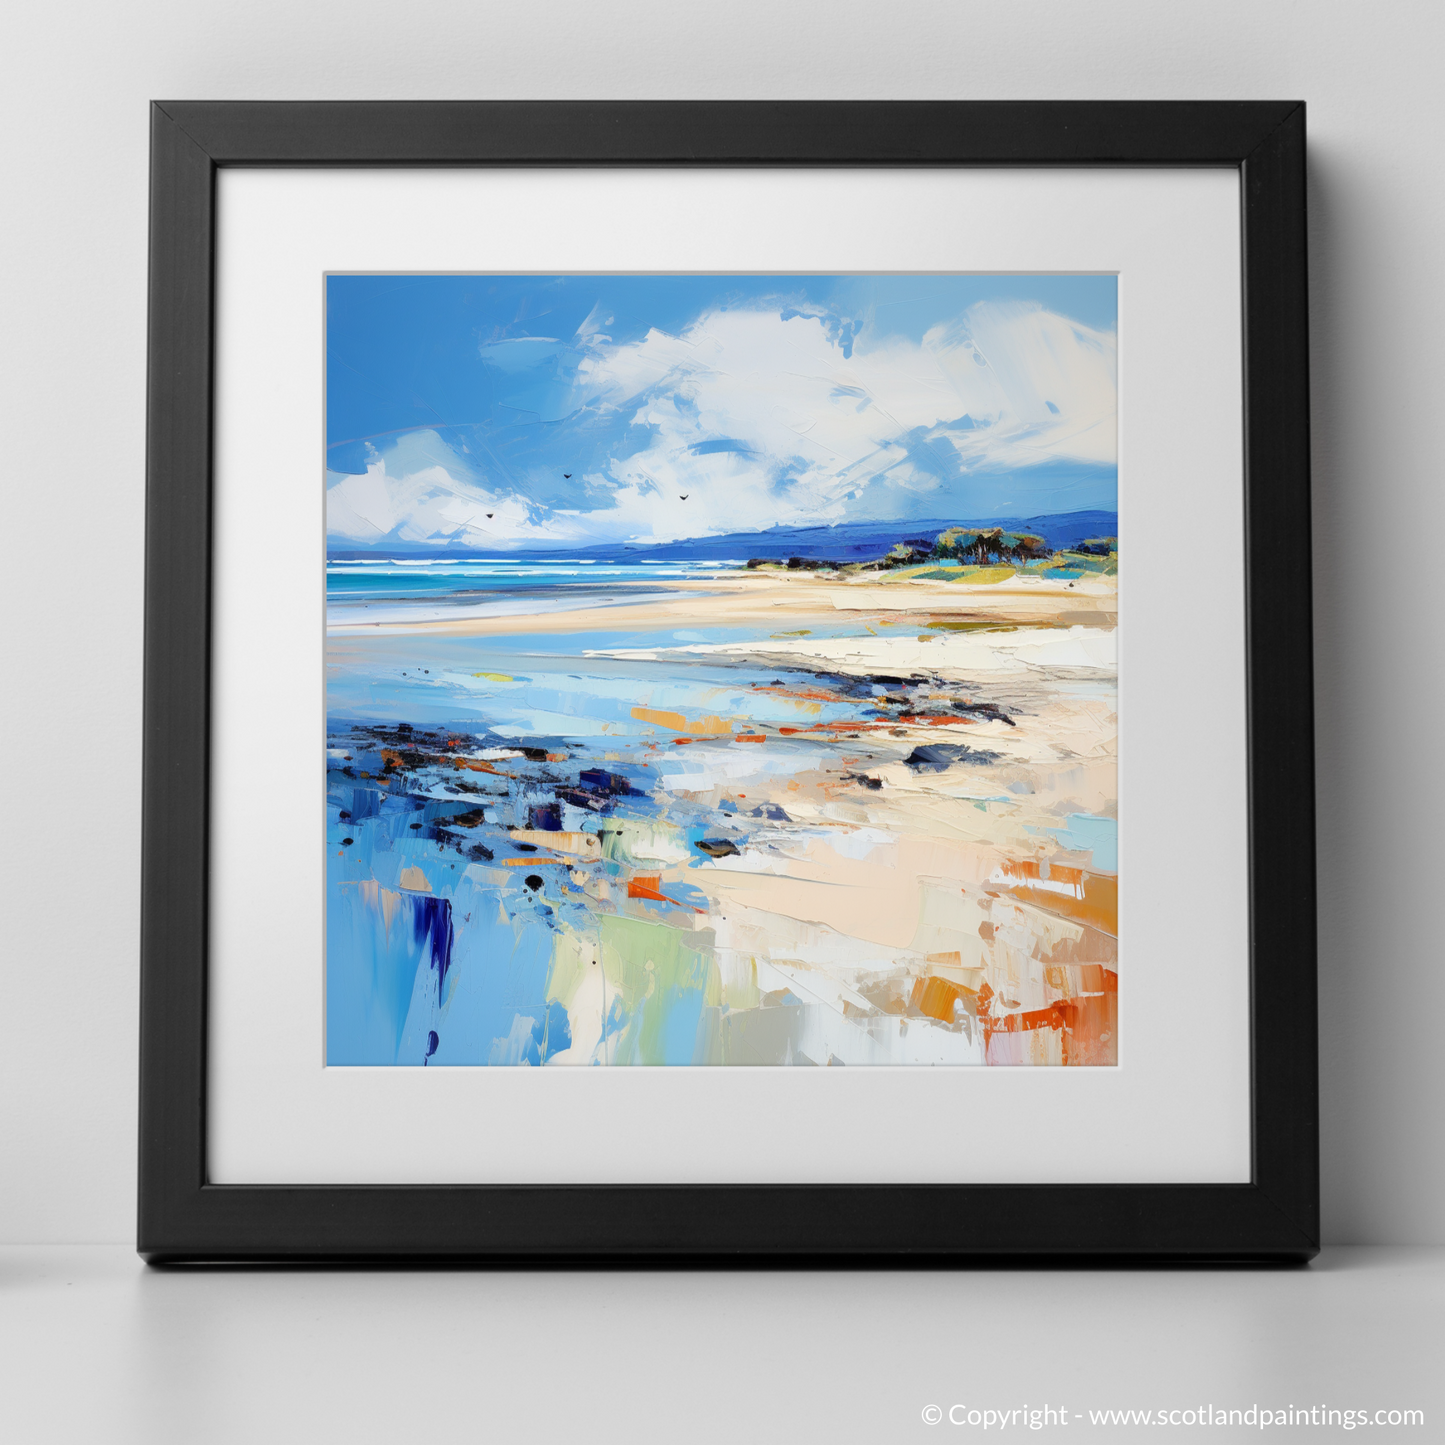 Art Print of Nairn Beach, Nairn with a black frame